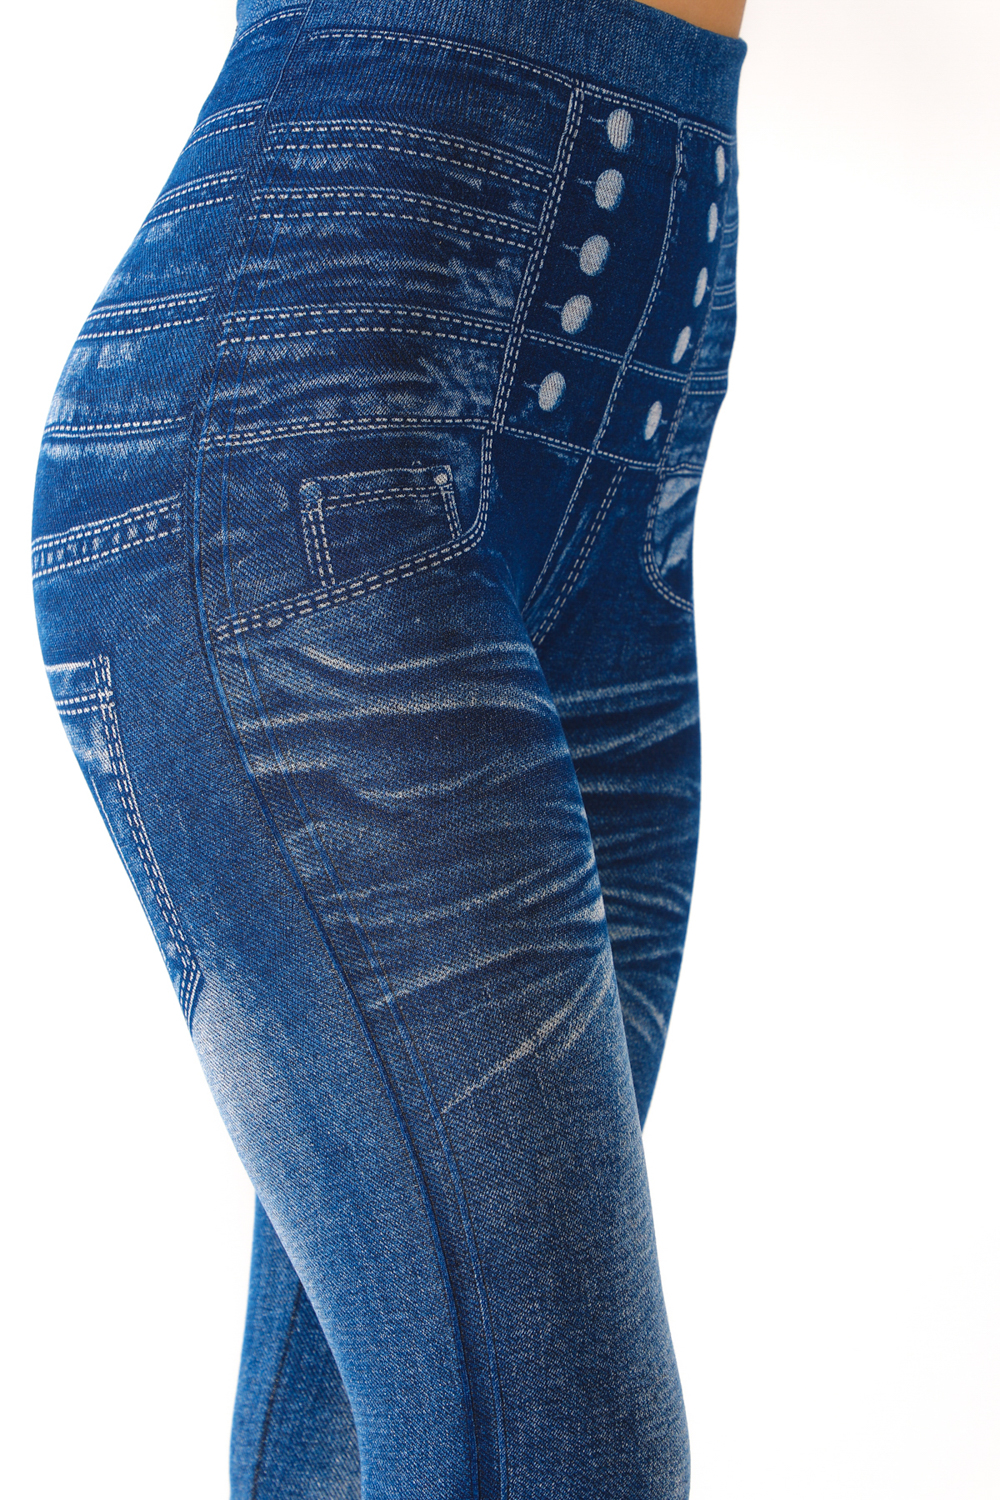 Buy Sipaya Fashion Jeans Leggings Women's Skinny Denim Jeggings with Pockets  Black M at Amazon.in